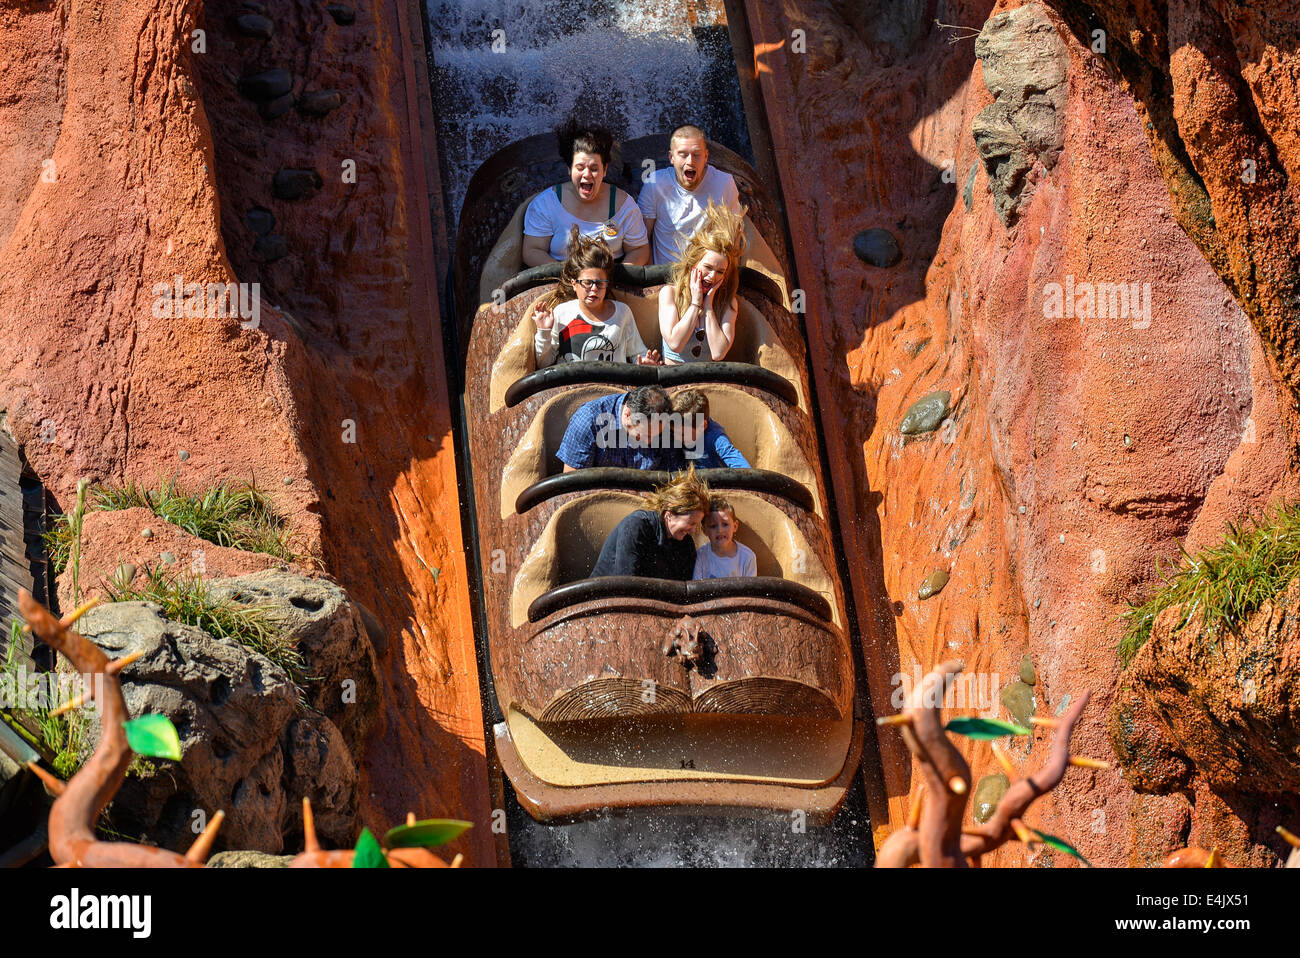 Disney Ride Rides, Splash Mountain, montagne russe, Disney World, Orlando, Floride Banque D'Images